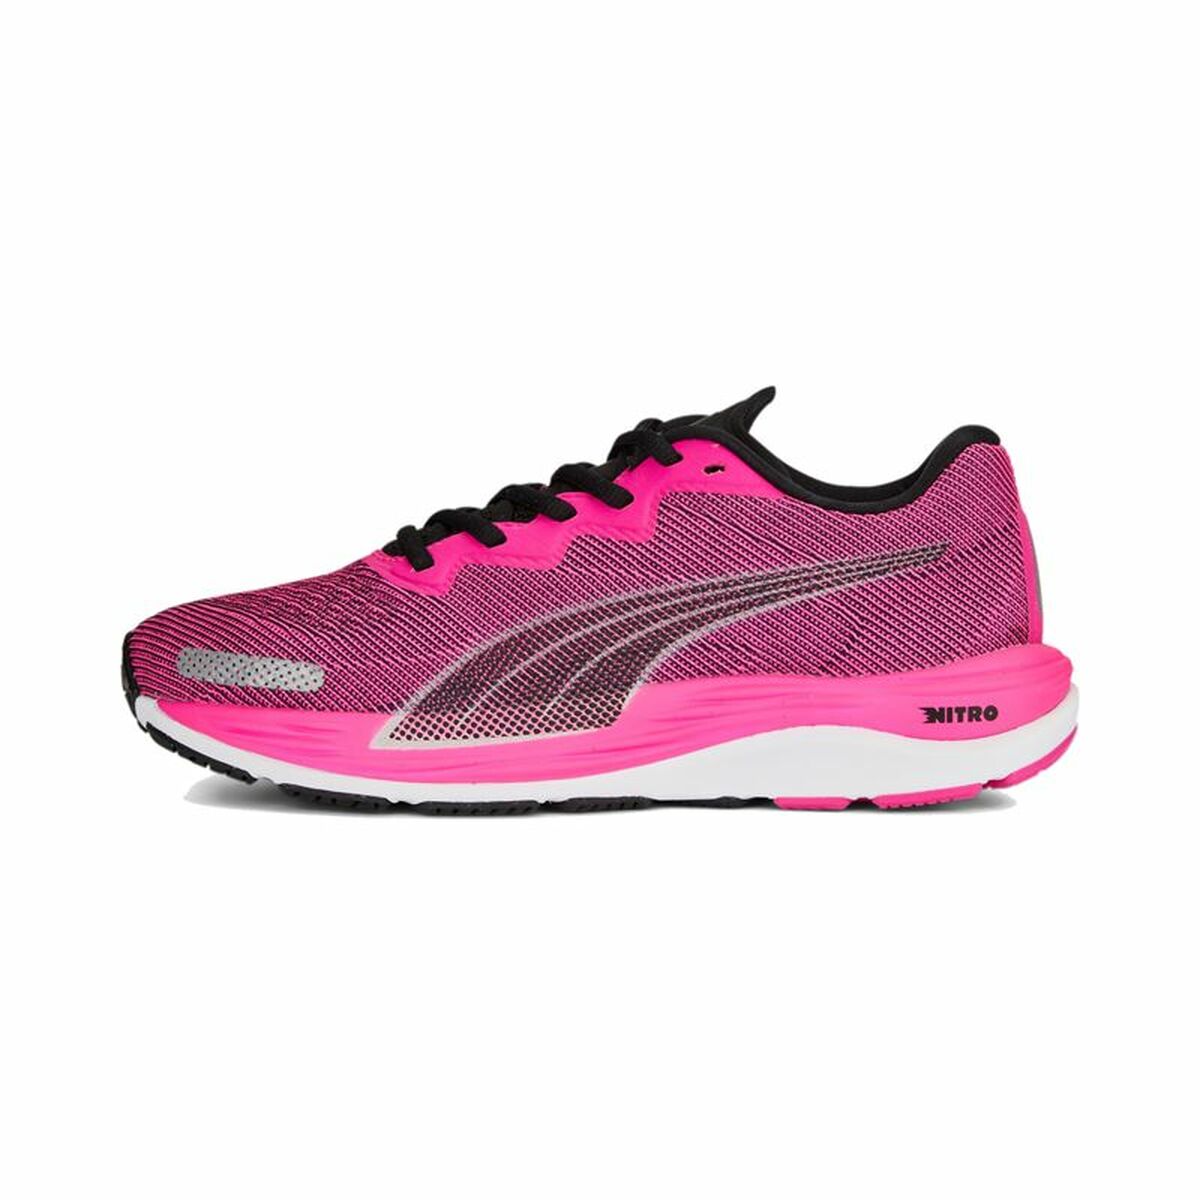 Chaussures de Running pour Adultes Puma Velocity NITRO 2 Femme Fuchsia